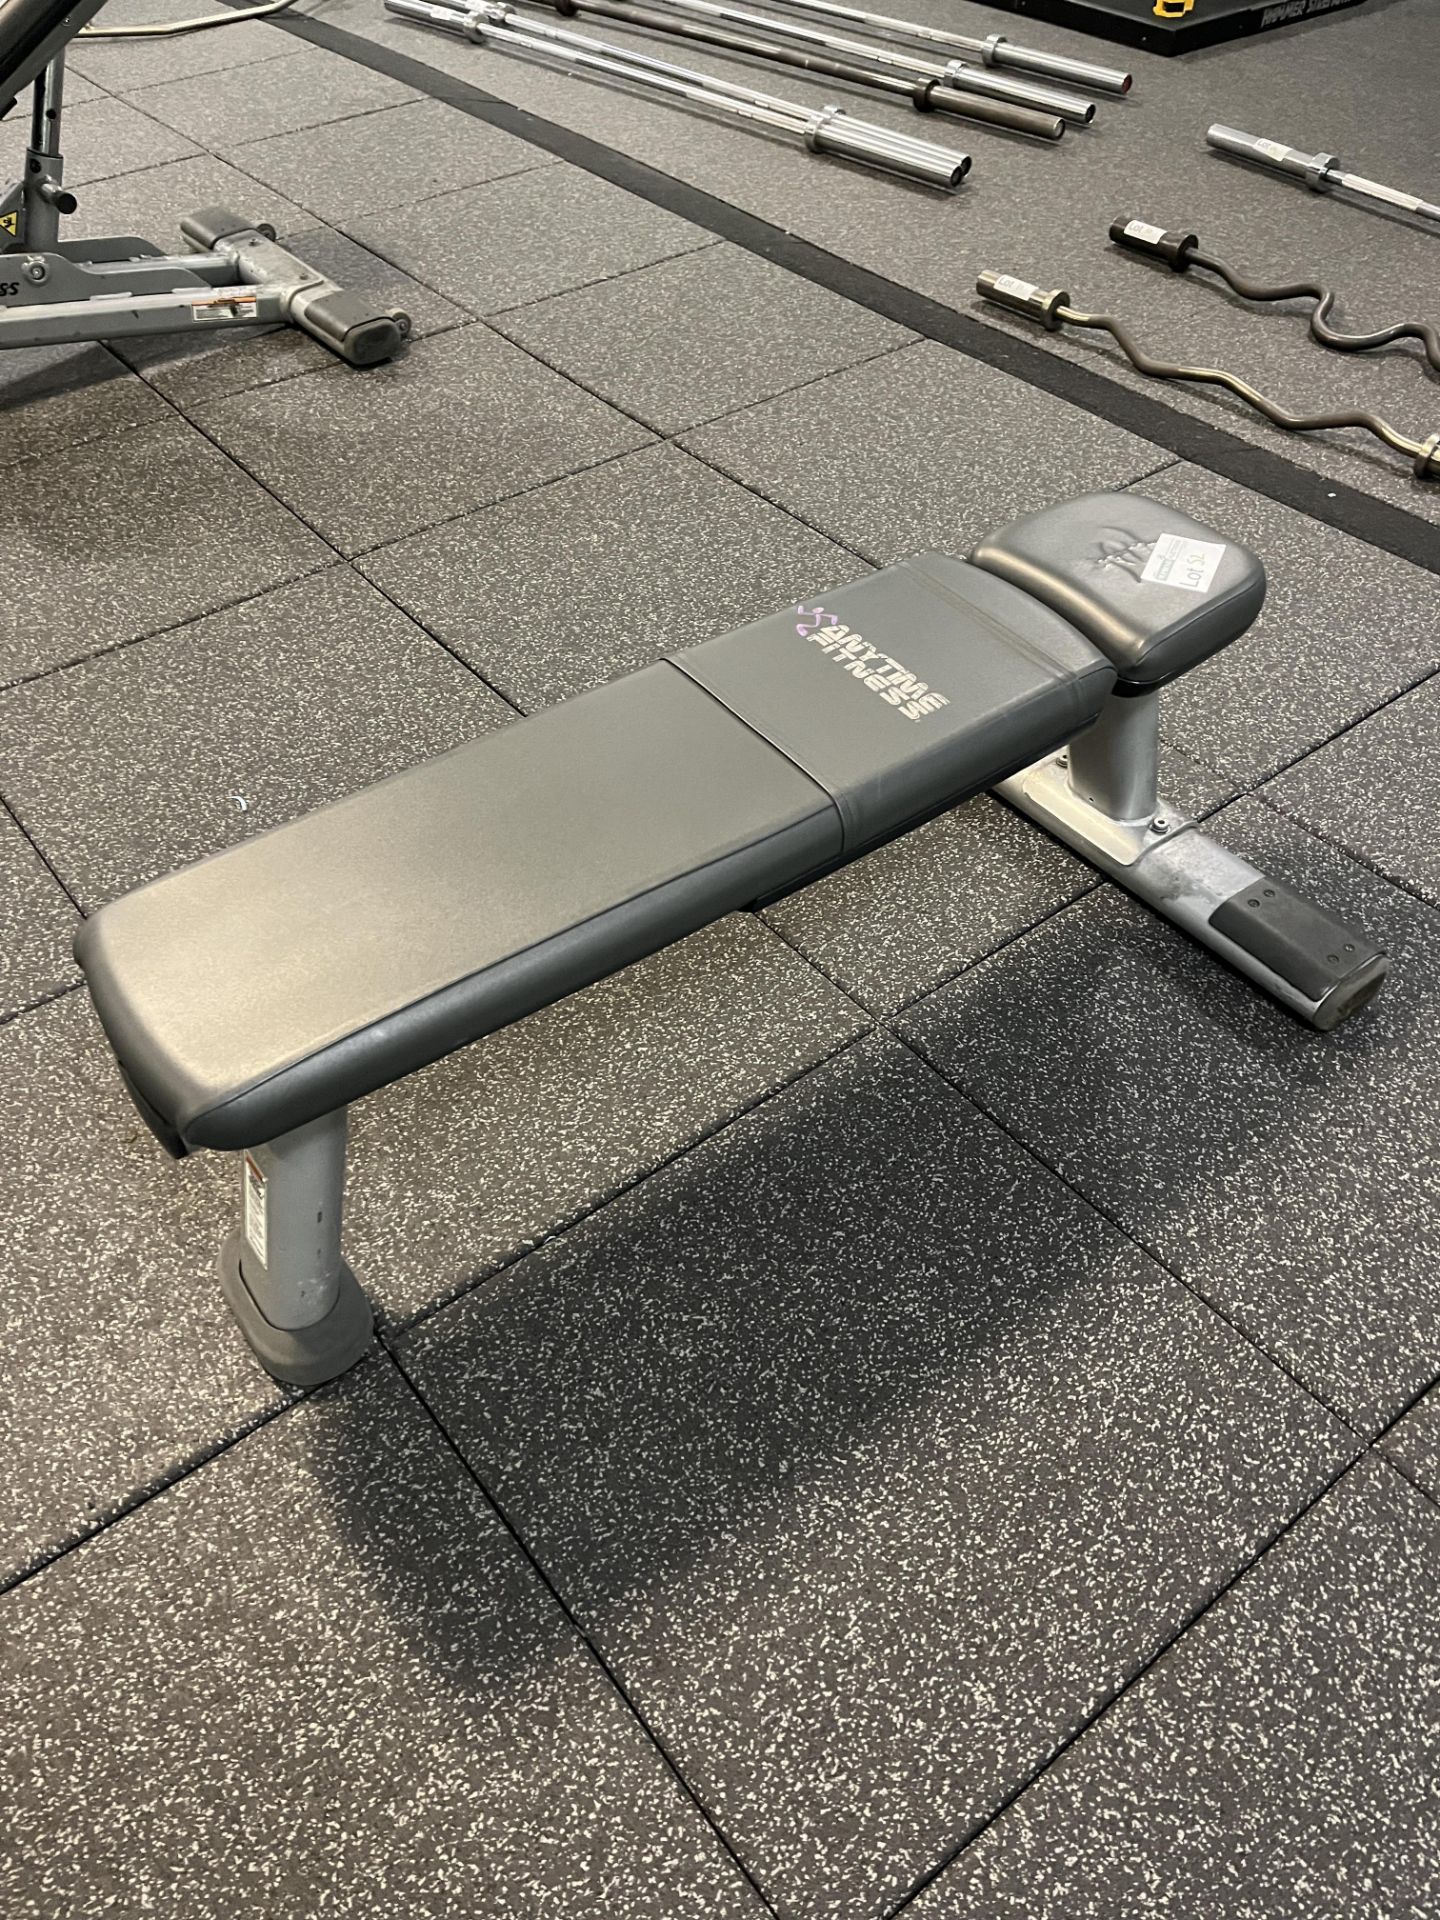 Jorden Fitness Flat Bench - Image 2 of 2